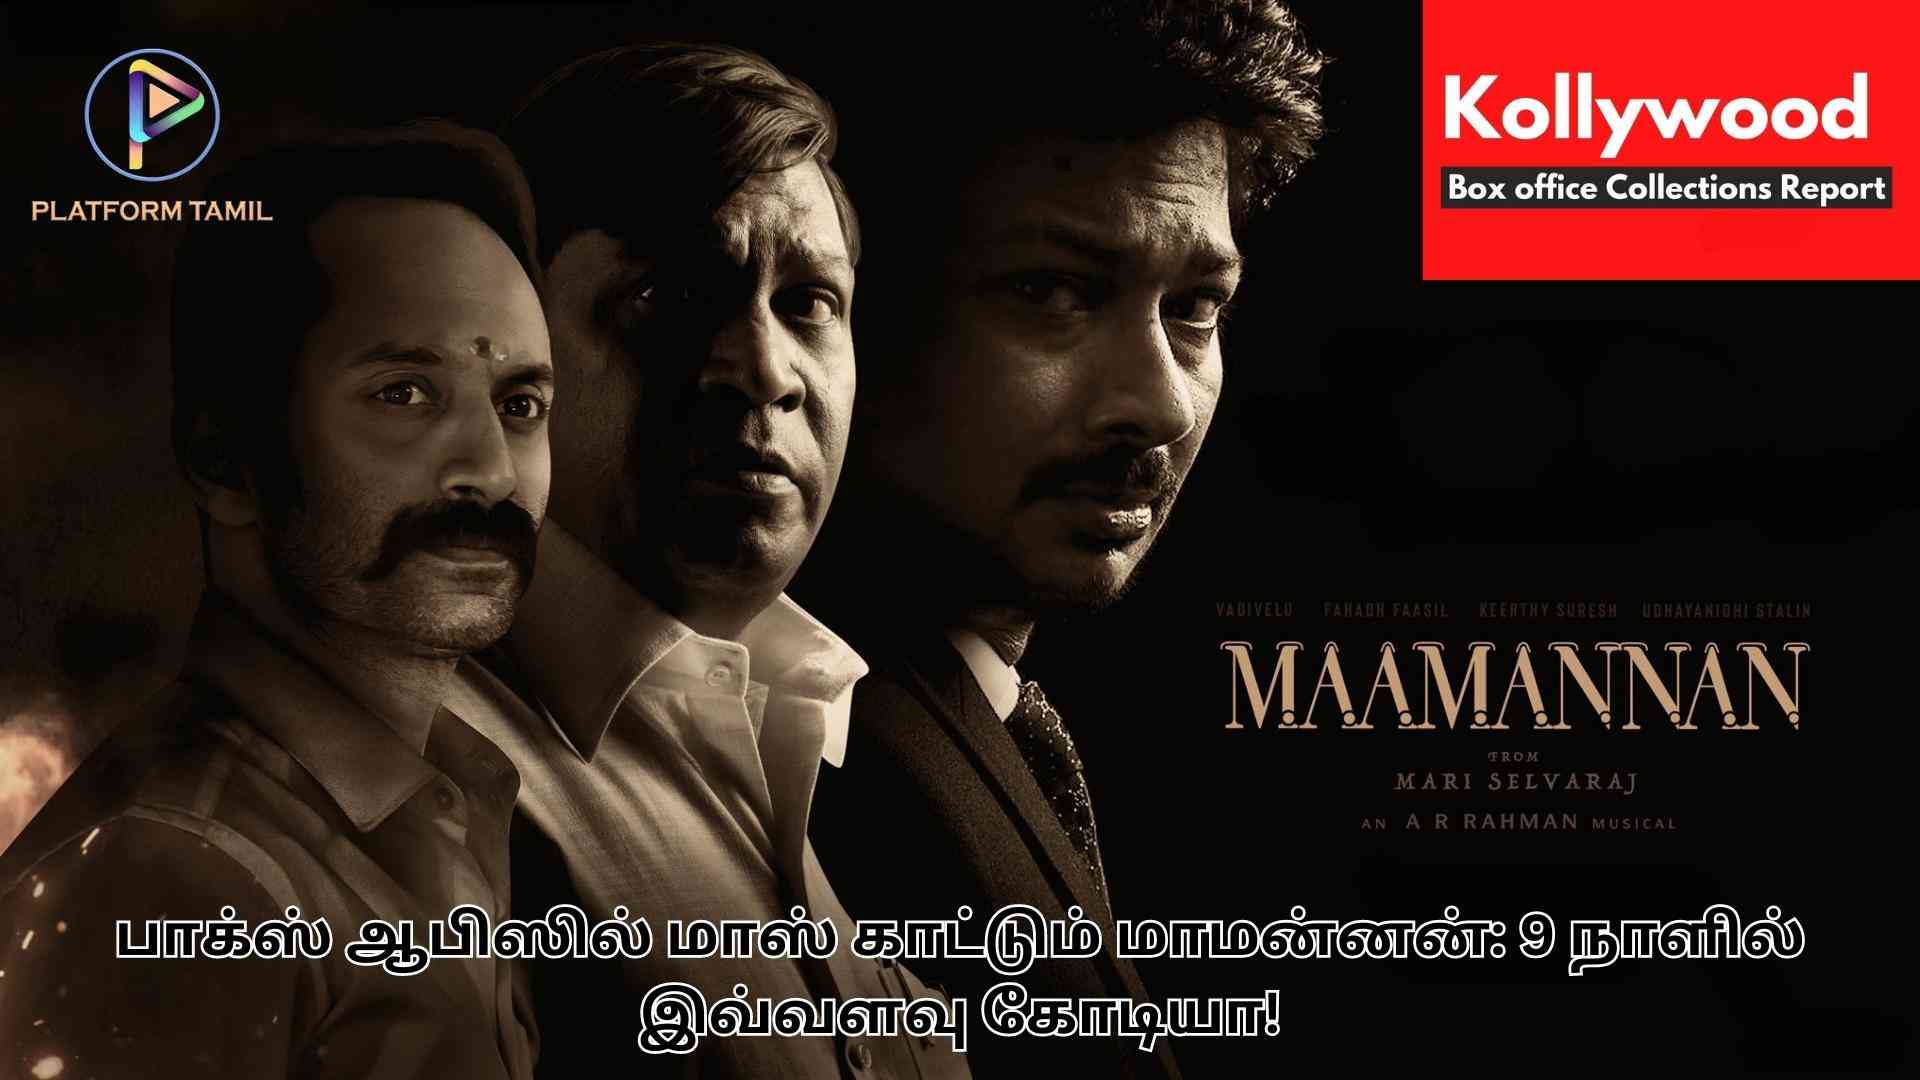 Maamannan Box Office Collection - Platform Tamil